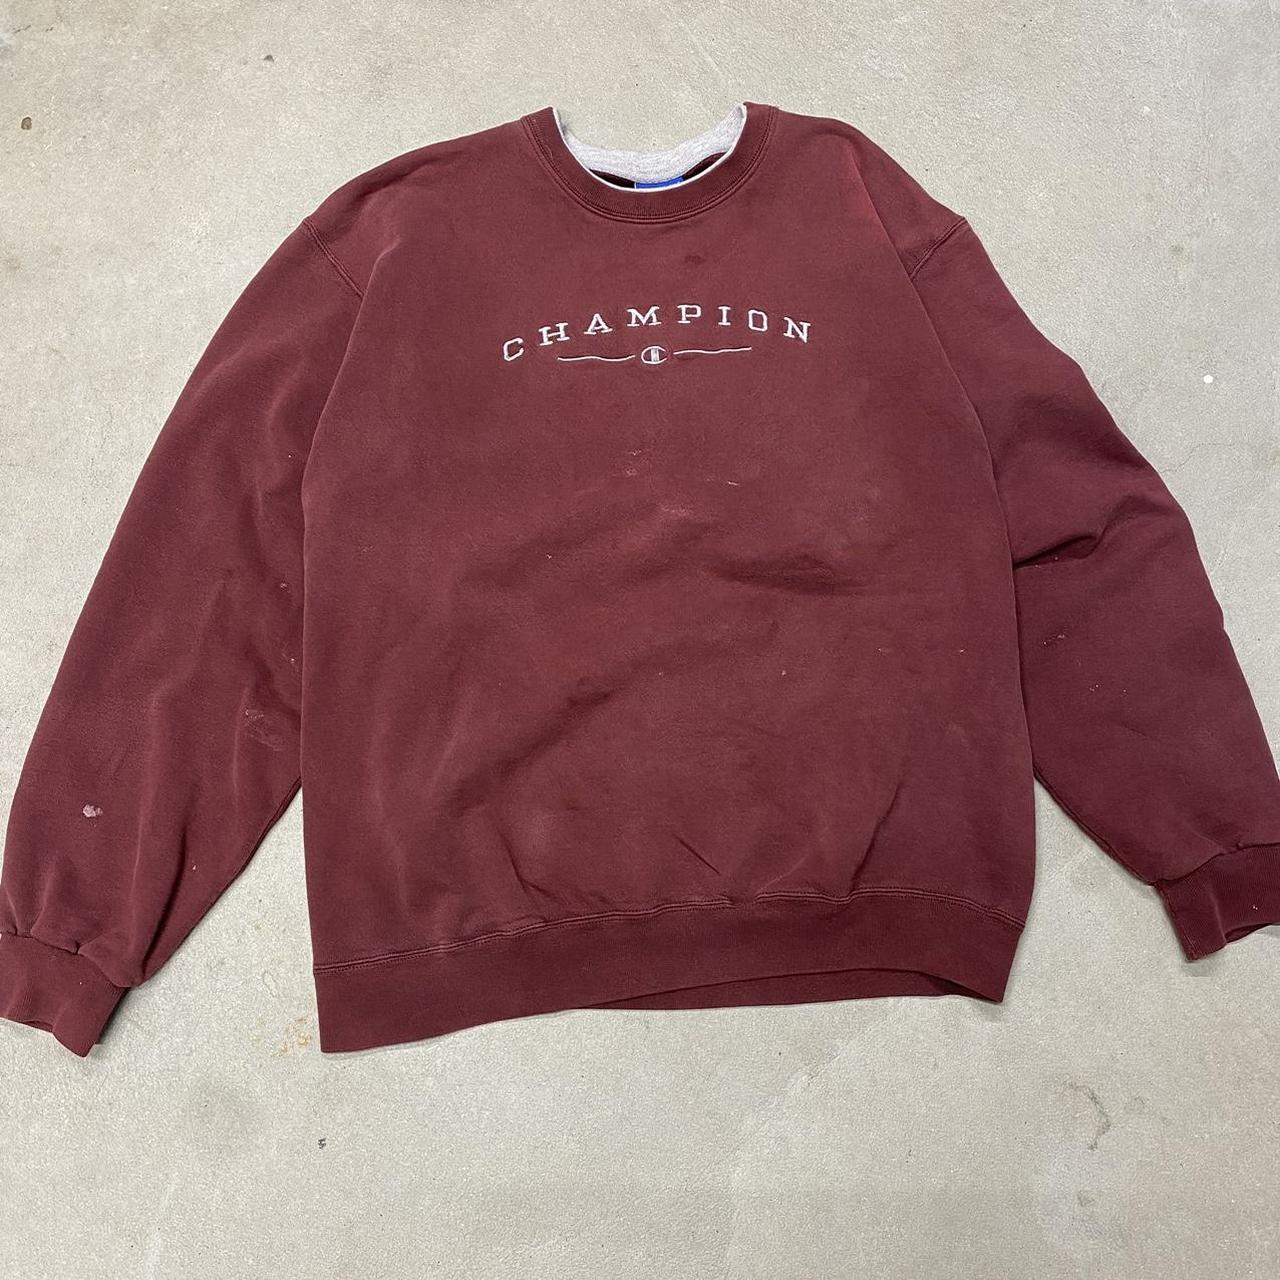 Champion Men's Burgundy and Grey Sweatshirt (4)